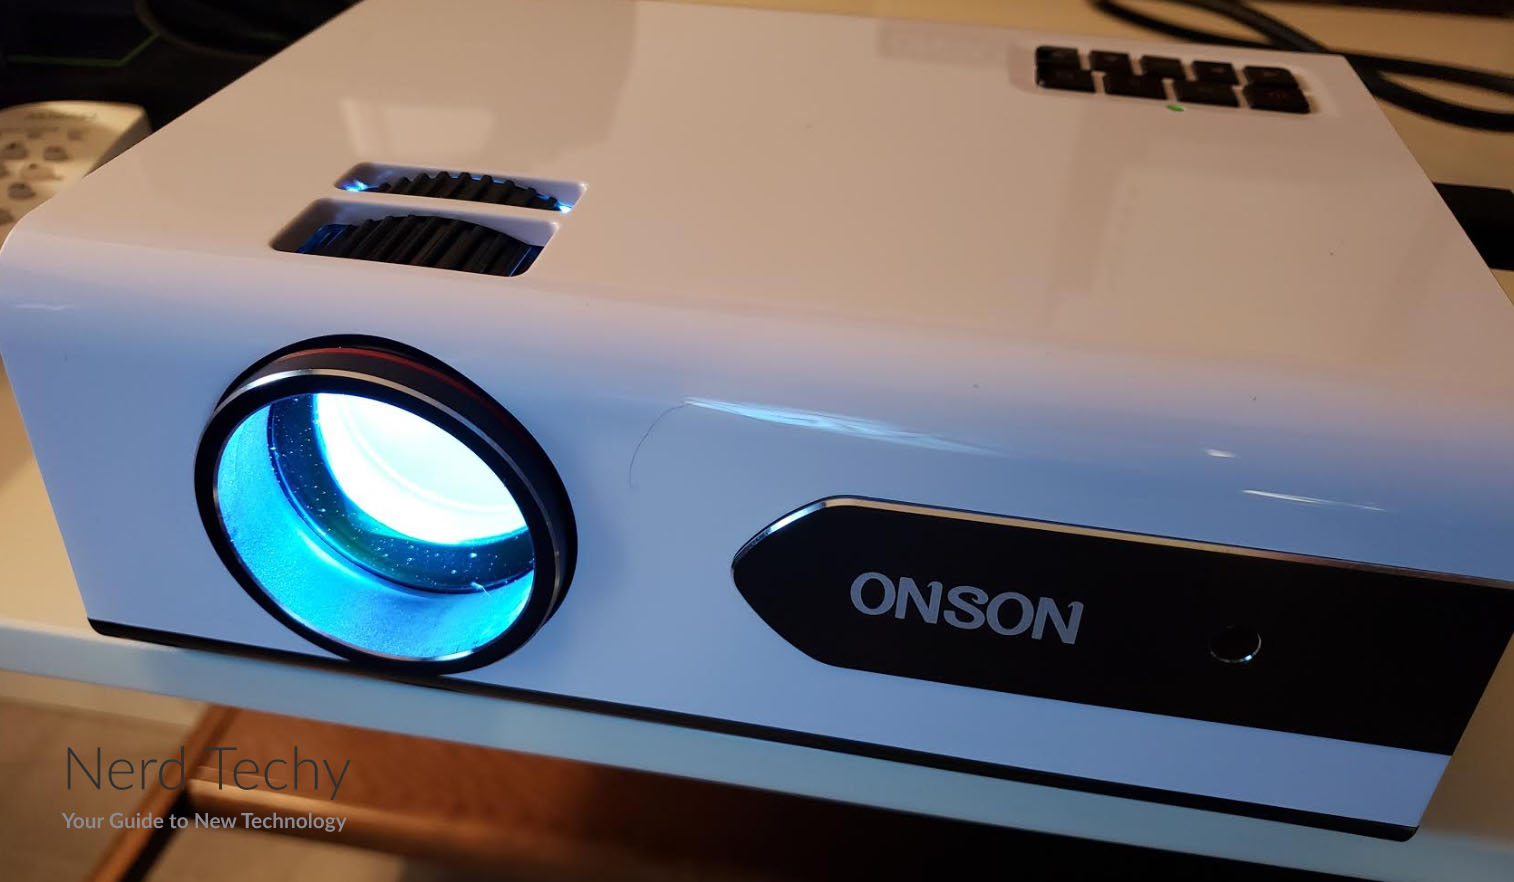 Onson GP18 Mini Projector